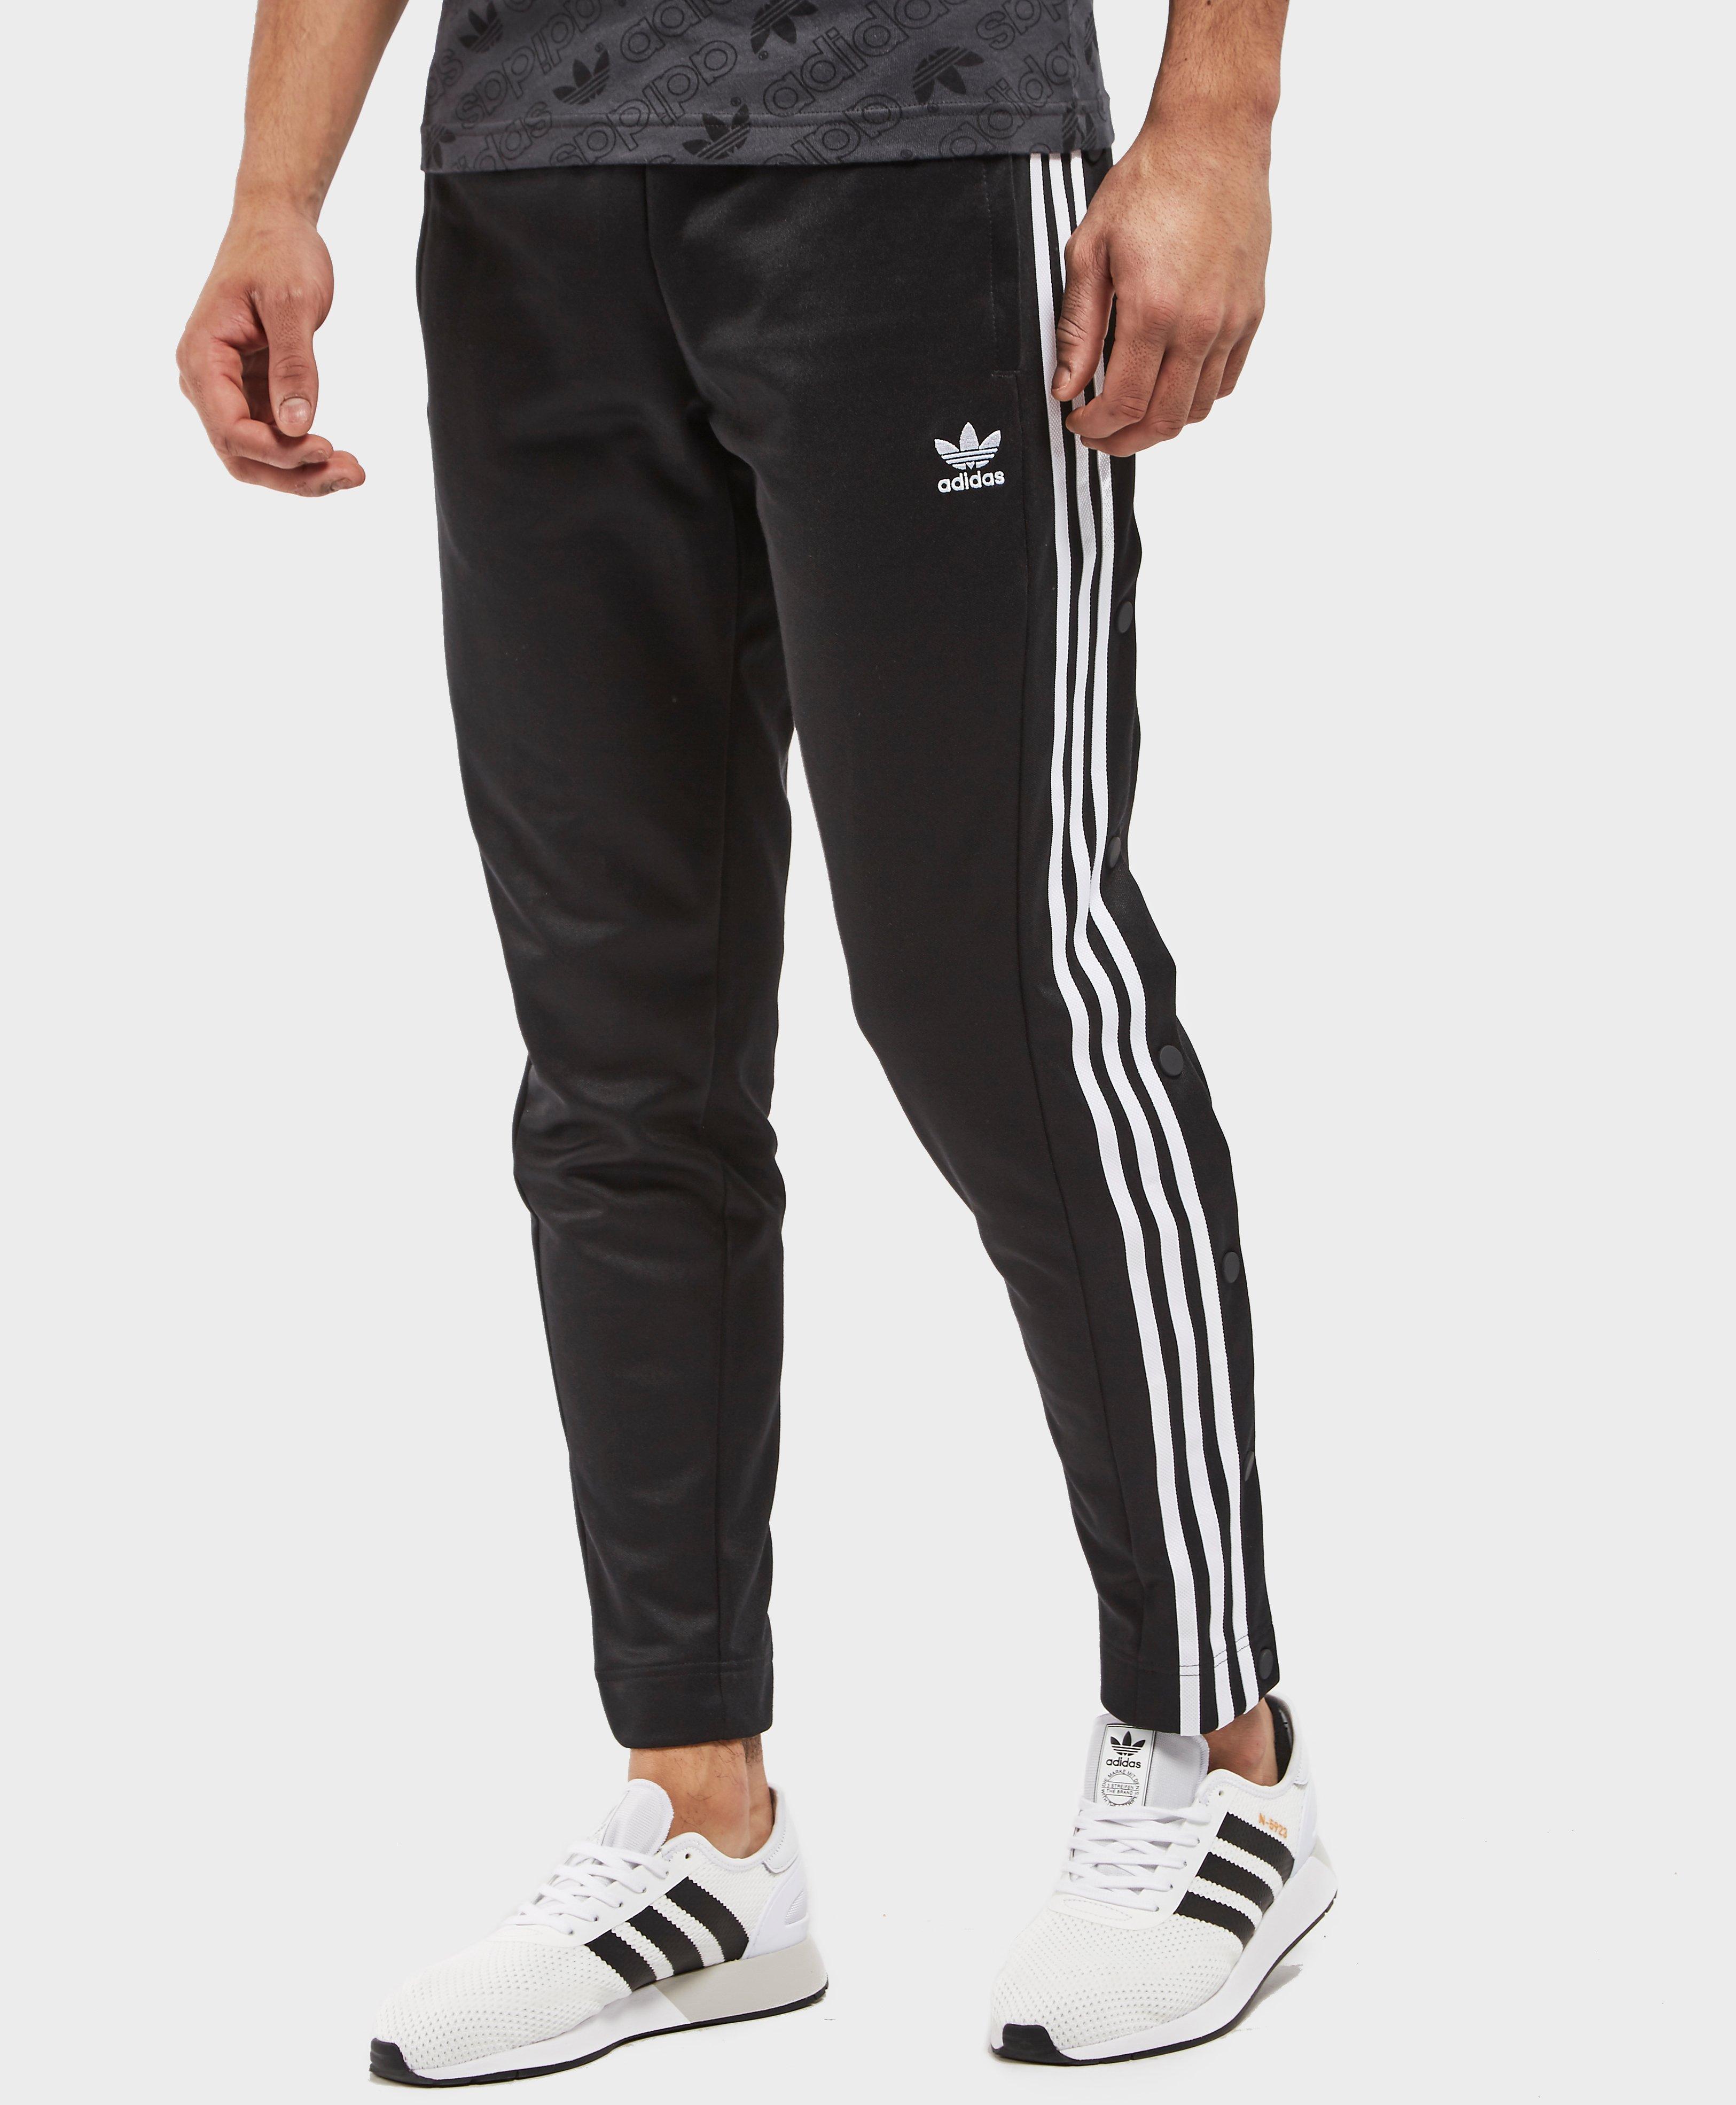 adidas Originals Cotton Adibreak Snap Pants in Black for Men - Lyst